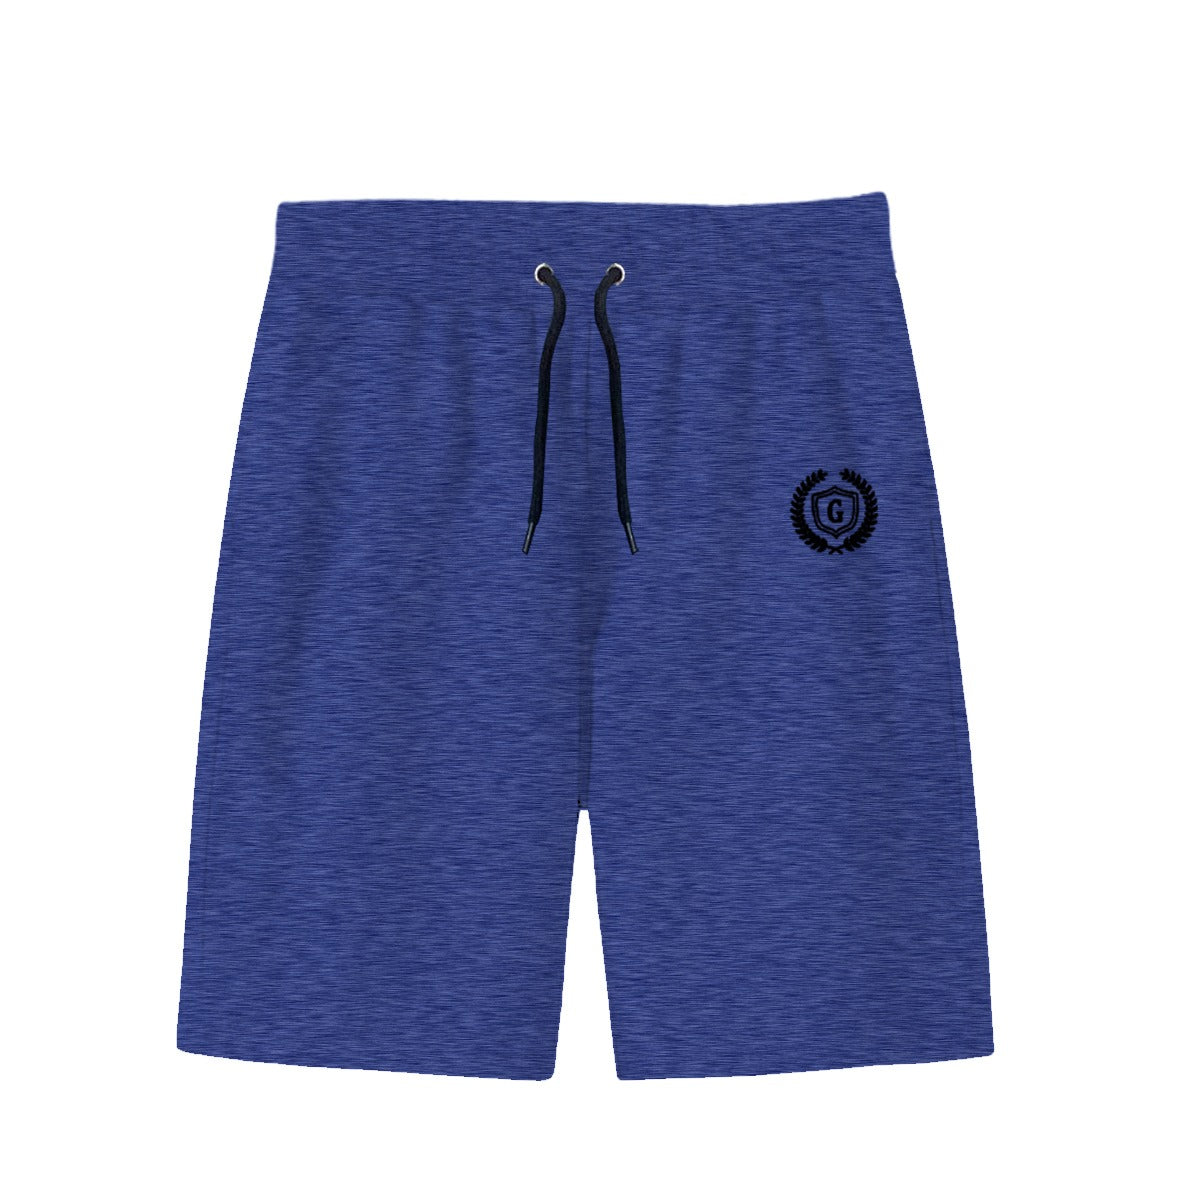 HG Signature Emb Three Quarter Summer Shorts - Textured Blue